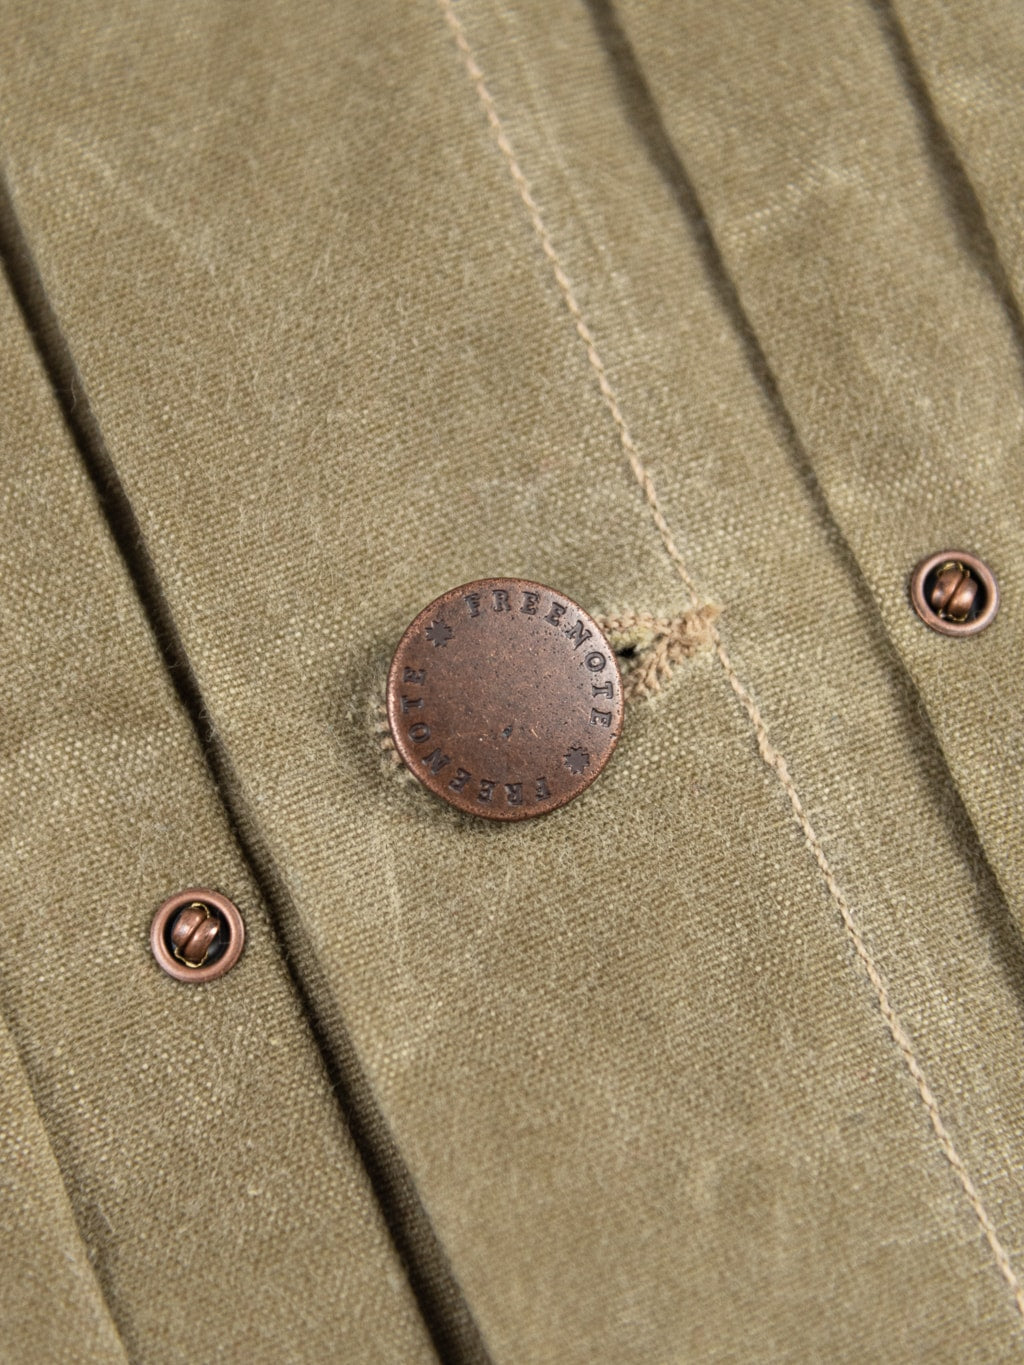 Freenote Cloth Riders Jacket Waxed Canvas Tobacco metal button closeup